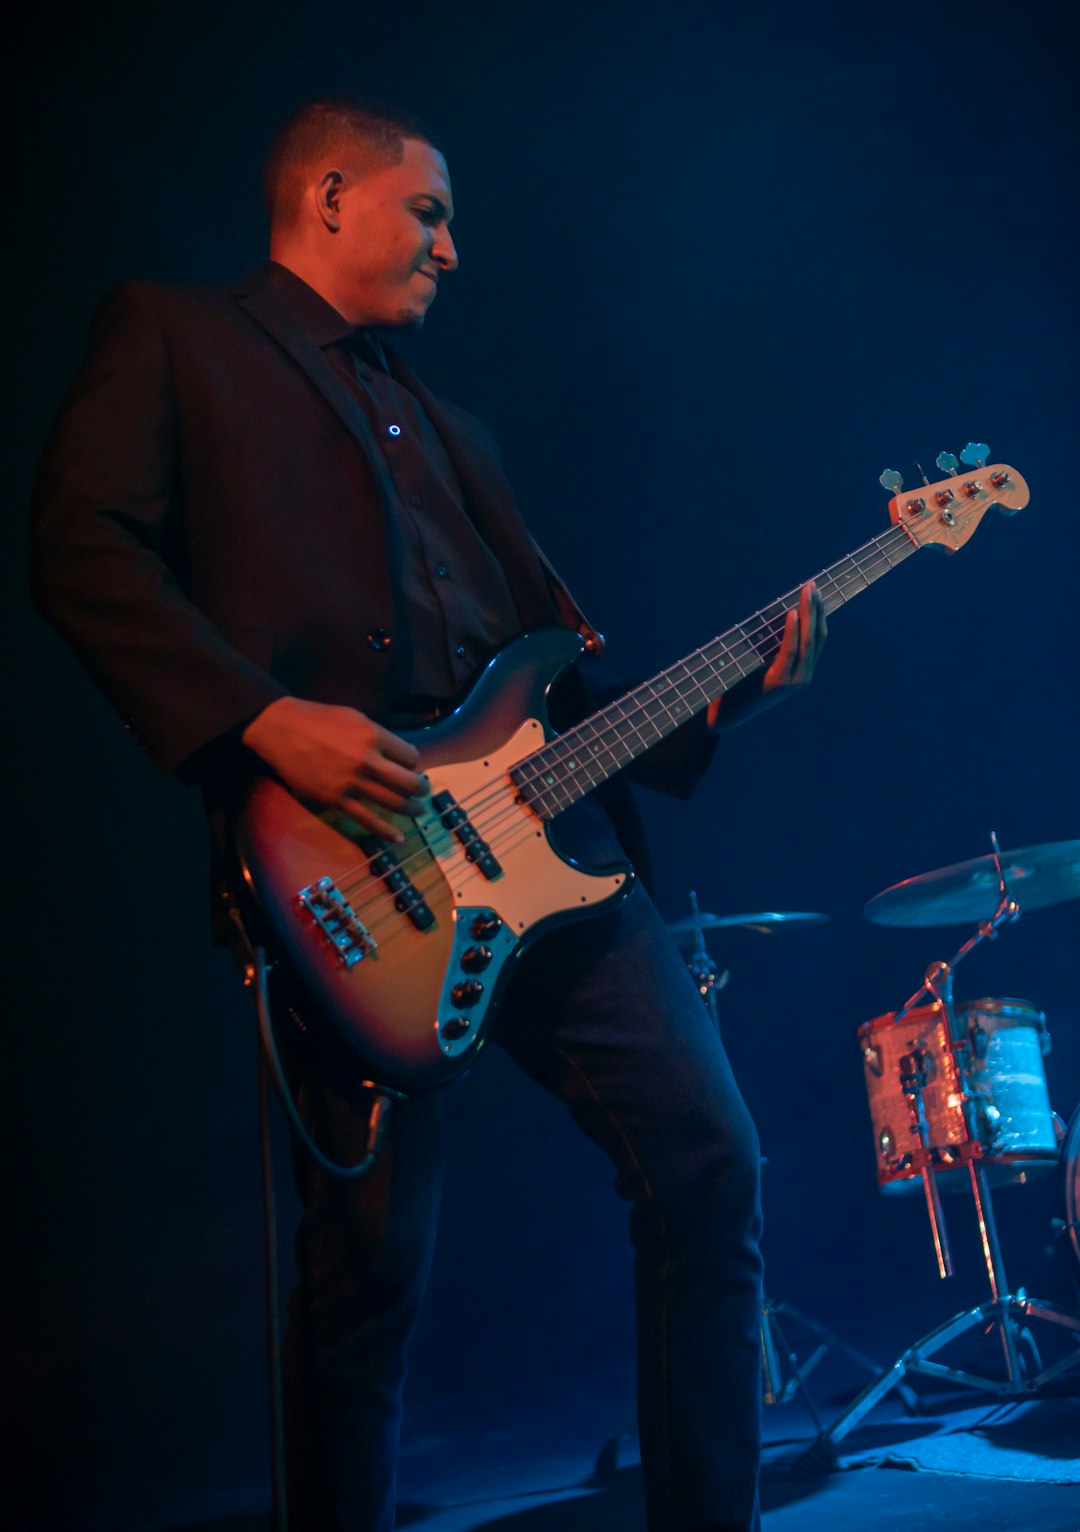 man in black coat playing electric guitar